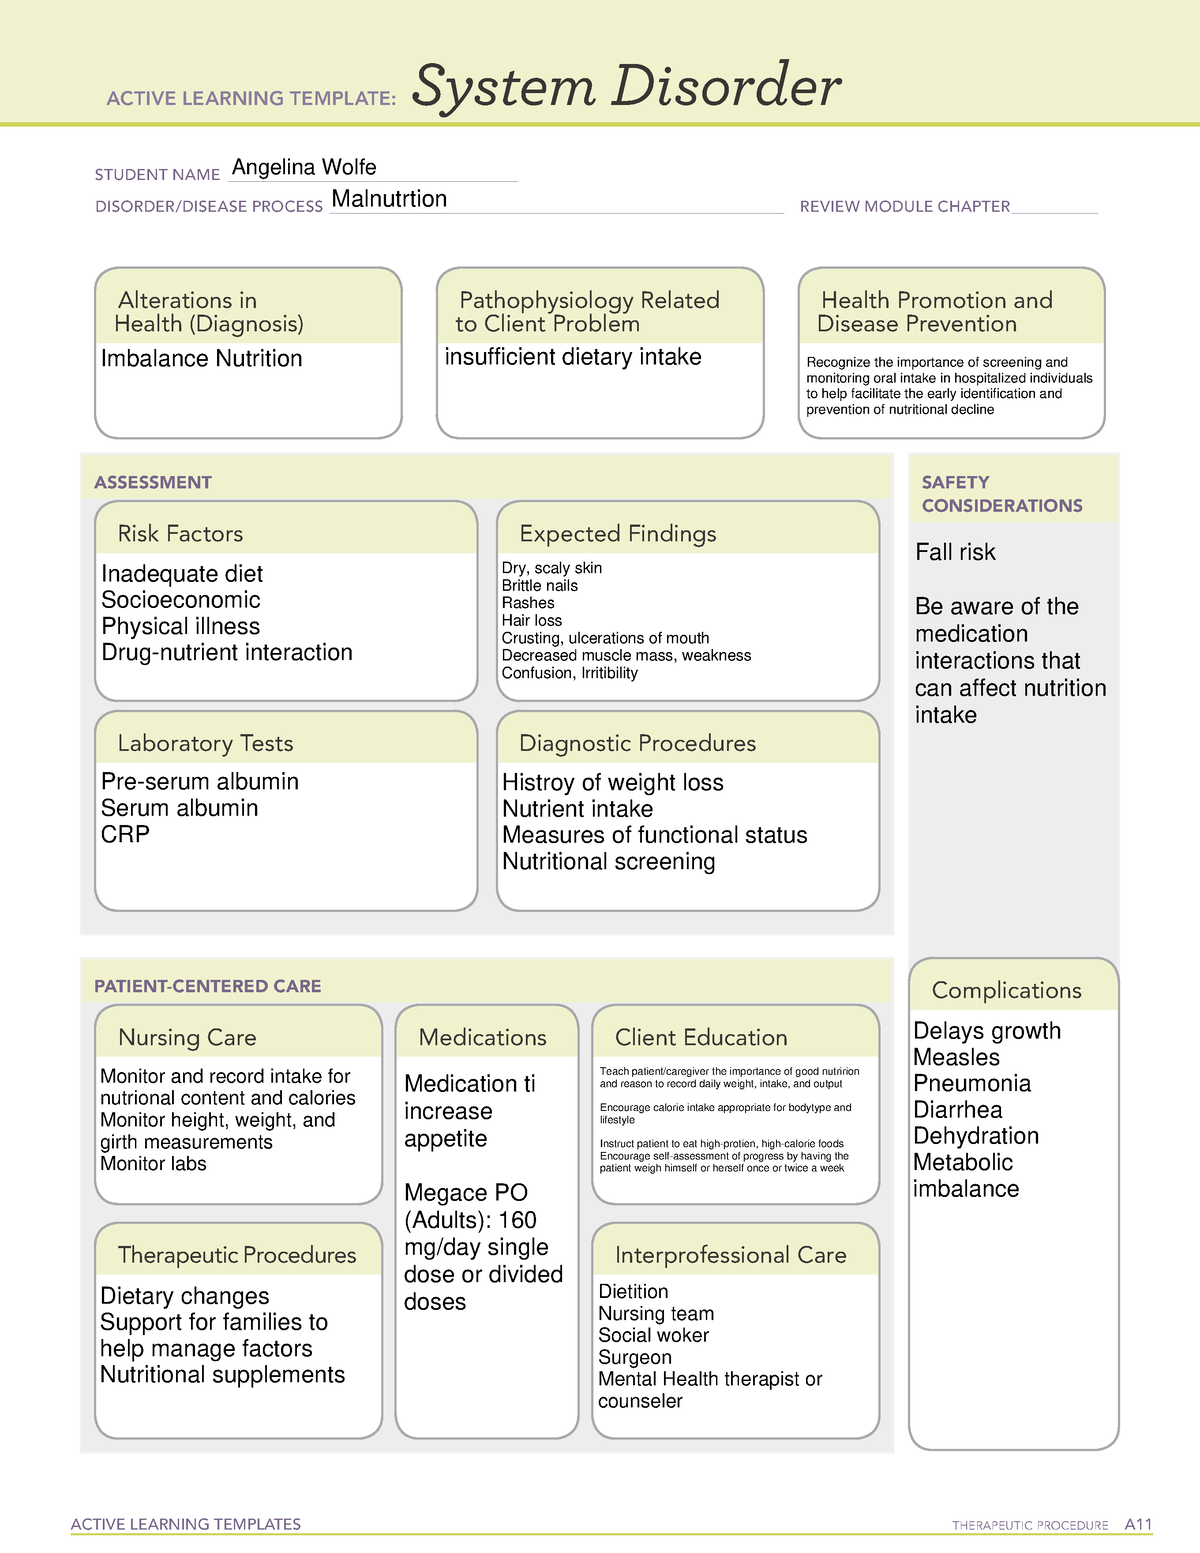 ati-system-disorder-postpartum-hemorrhage-active-learning-templates